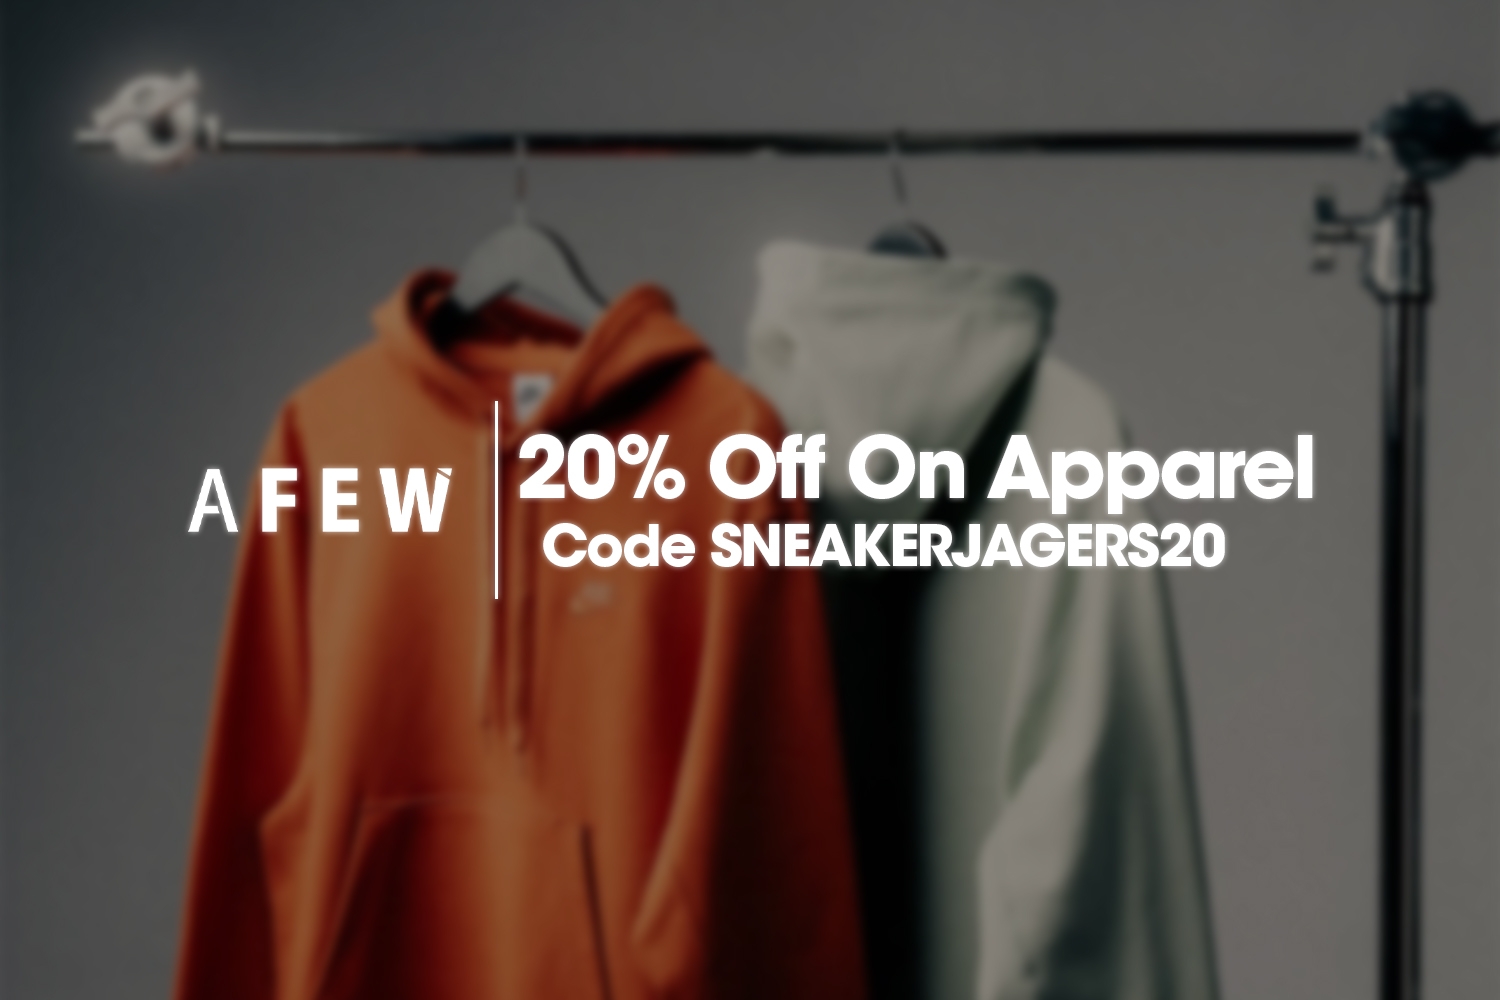 AFEW x Sneakerjagers discount code on apparel